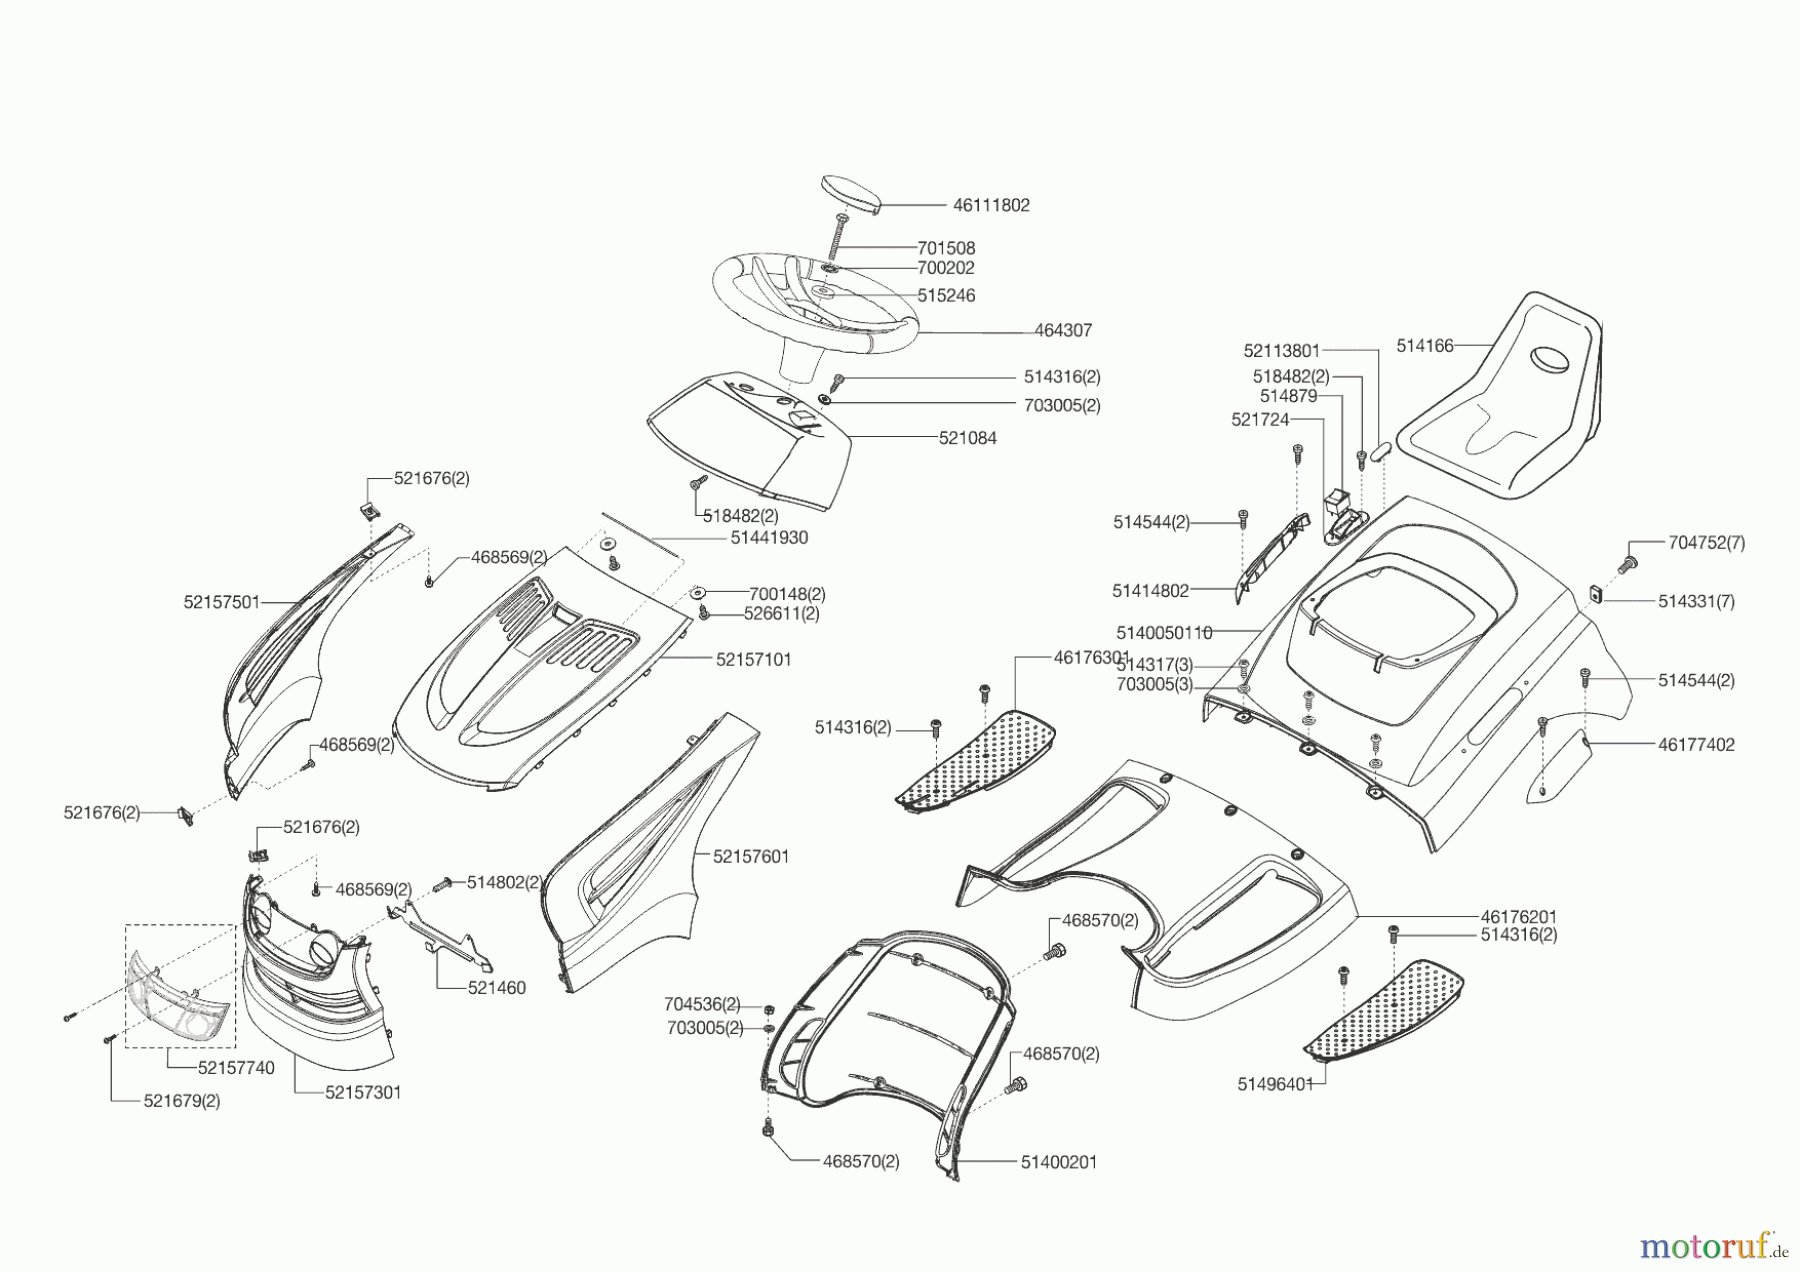  AL-KO Gartentechnik Rasentraktor Comfort T 954 HD-A  ab 03/2015 Seite 1